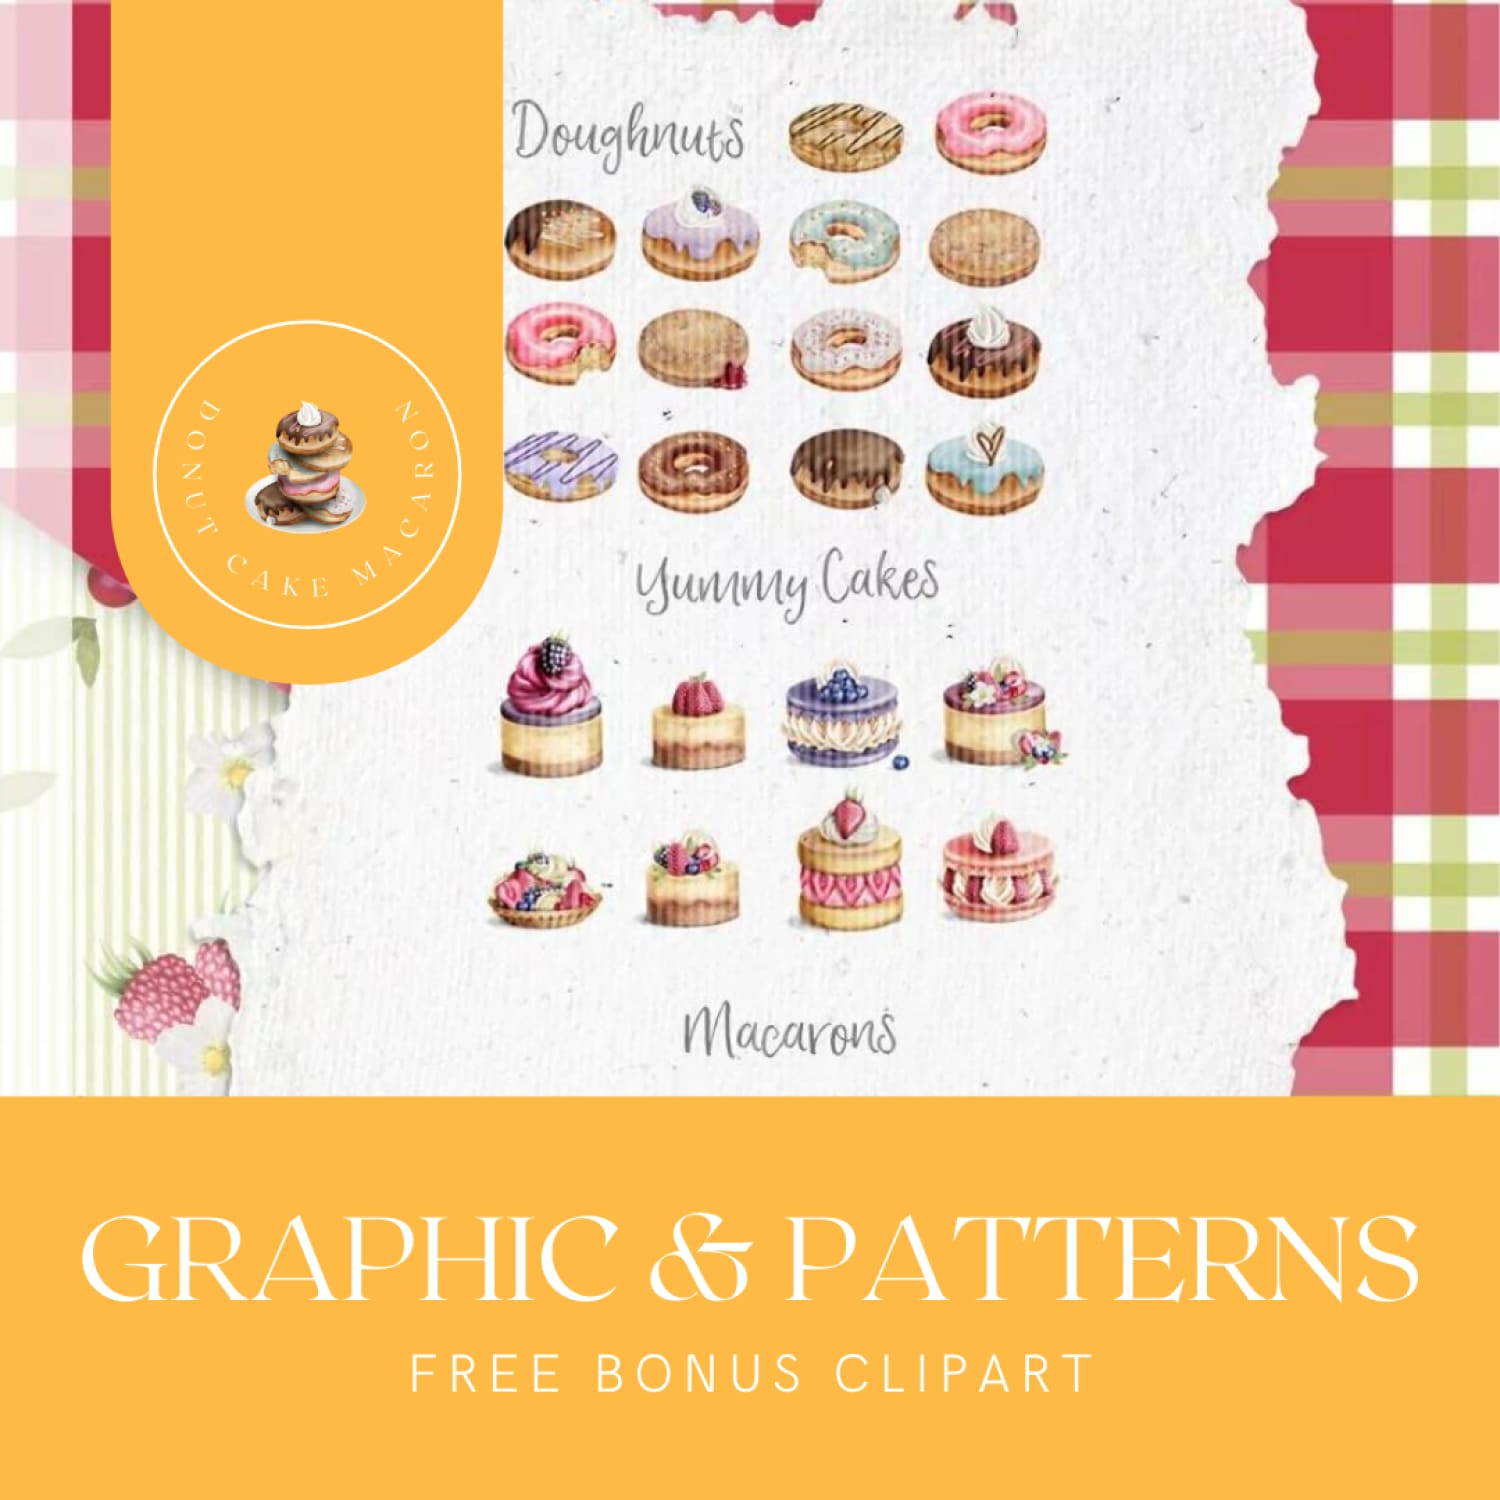 Donut, Cake, Macaron Graphic & Patterns / free bonus Clipart.